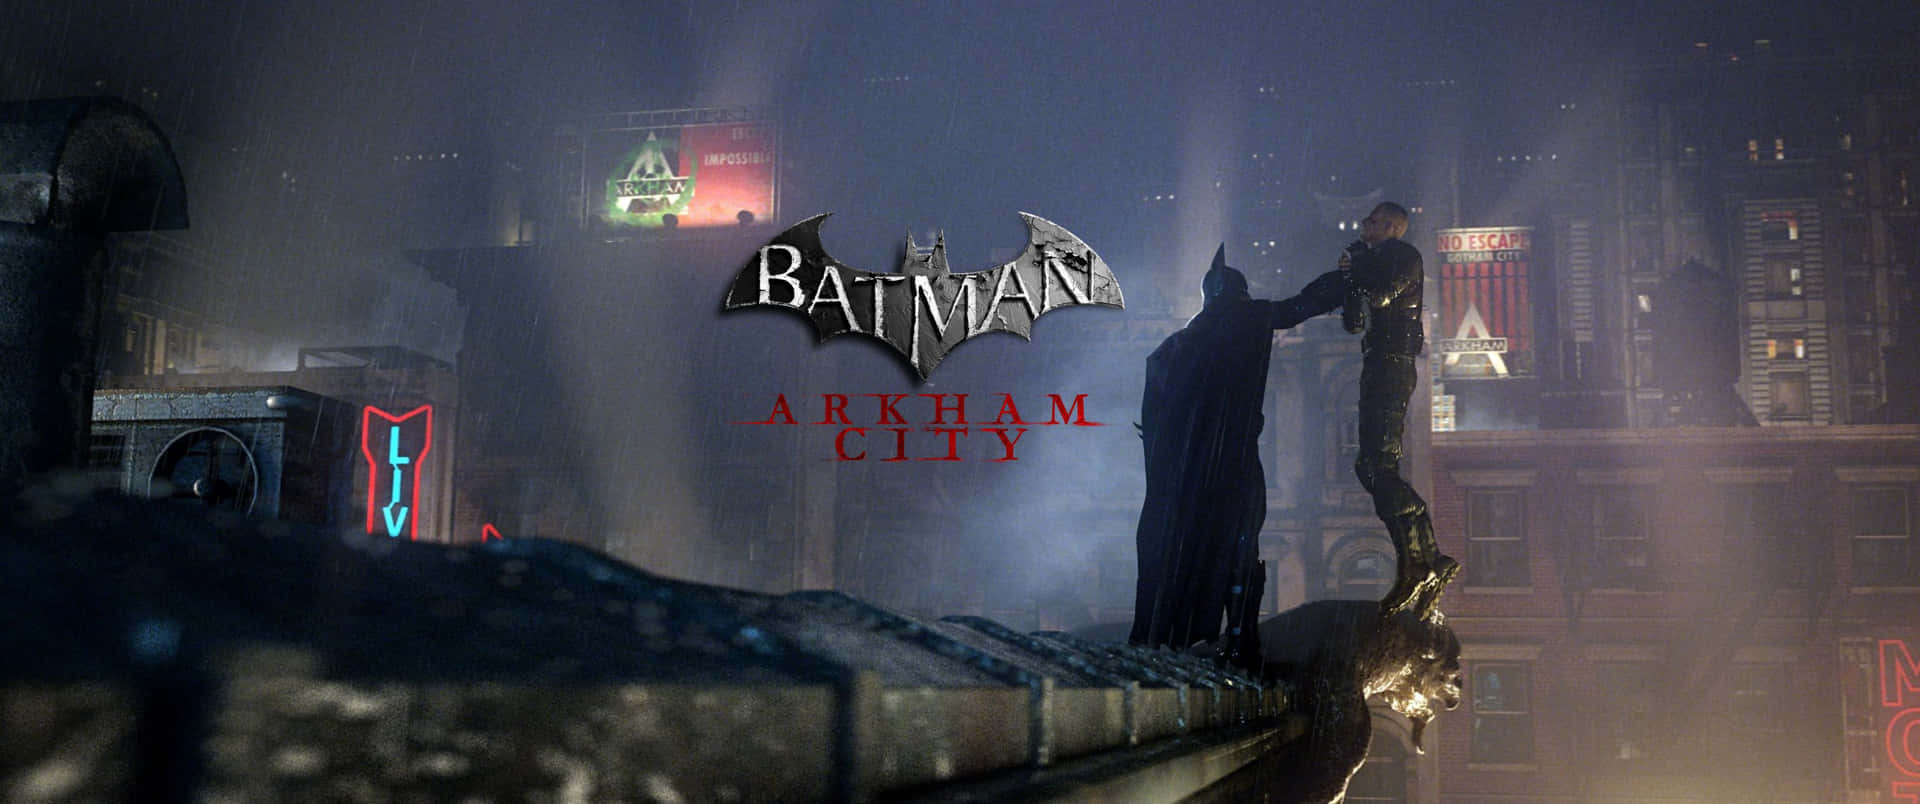 Batmanse Mantiene Firme En Arkham City.